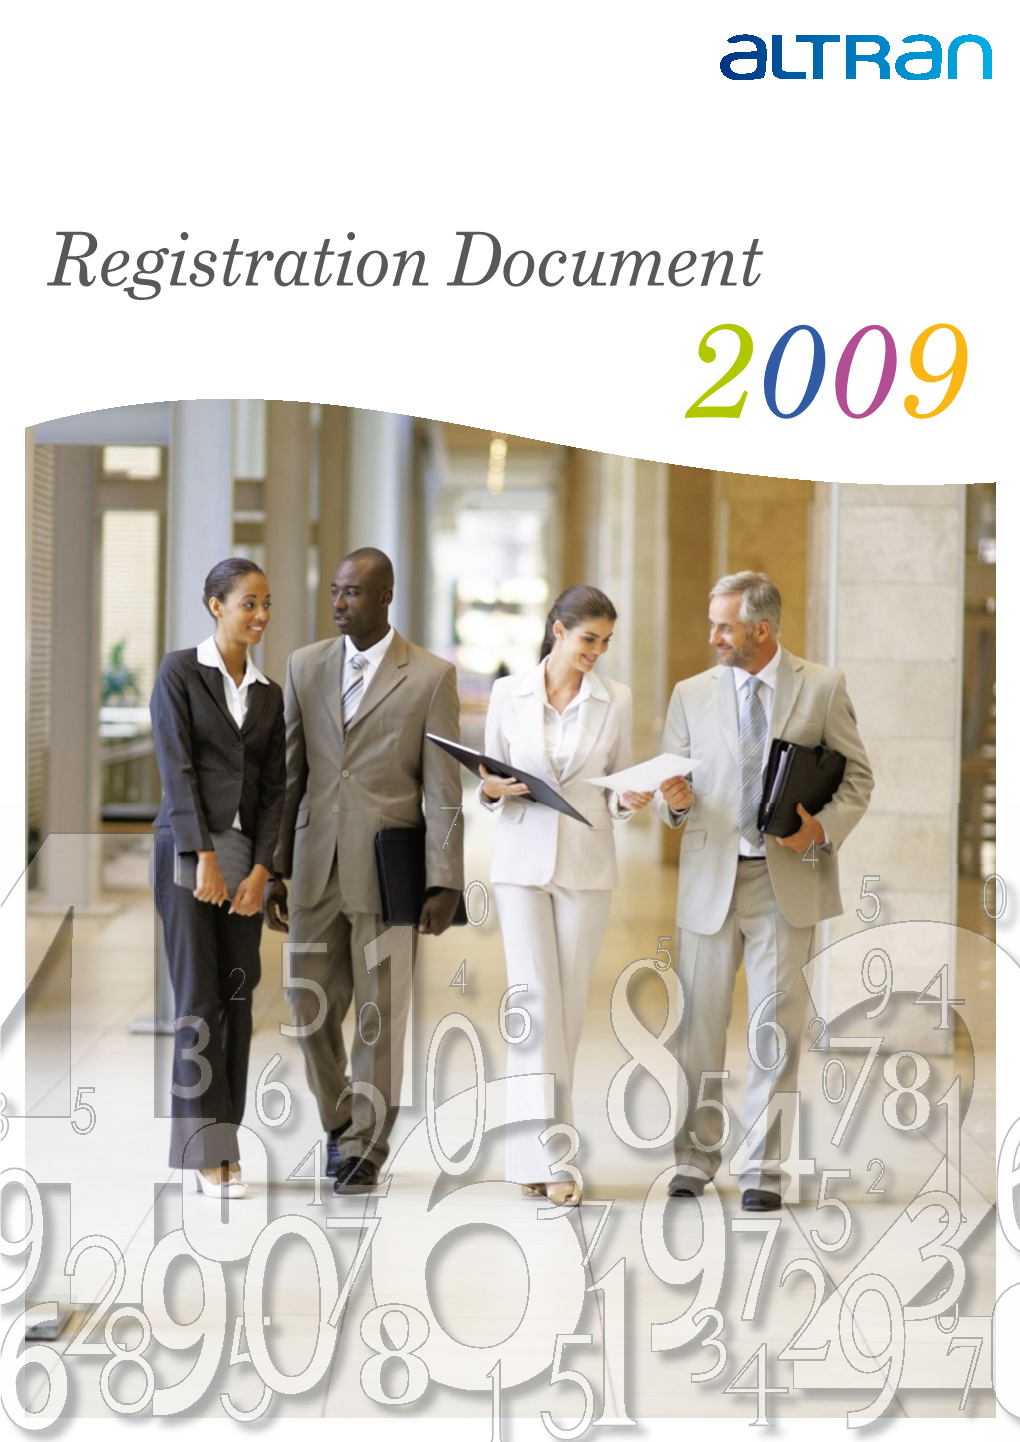 Registration Document 2009 Summary